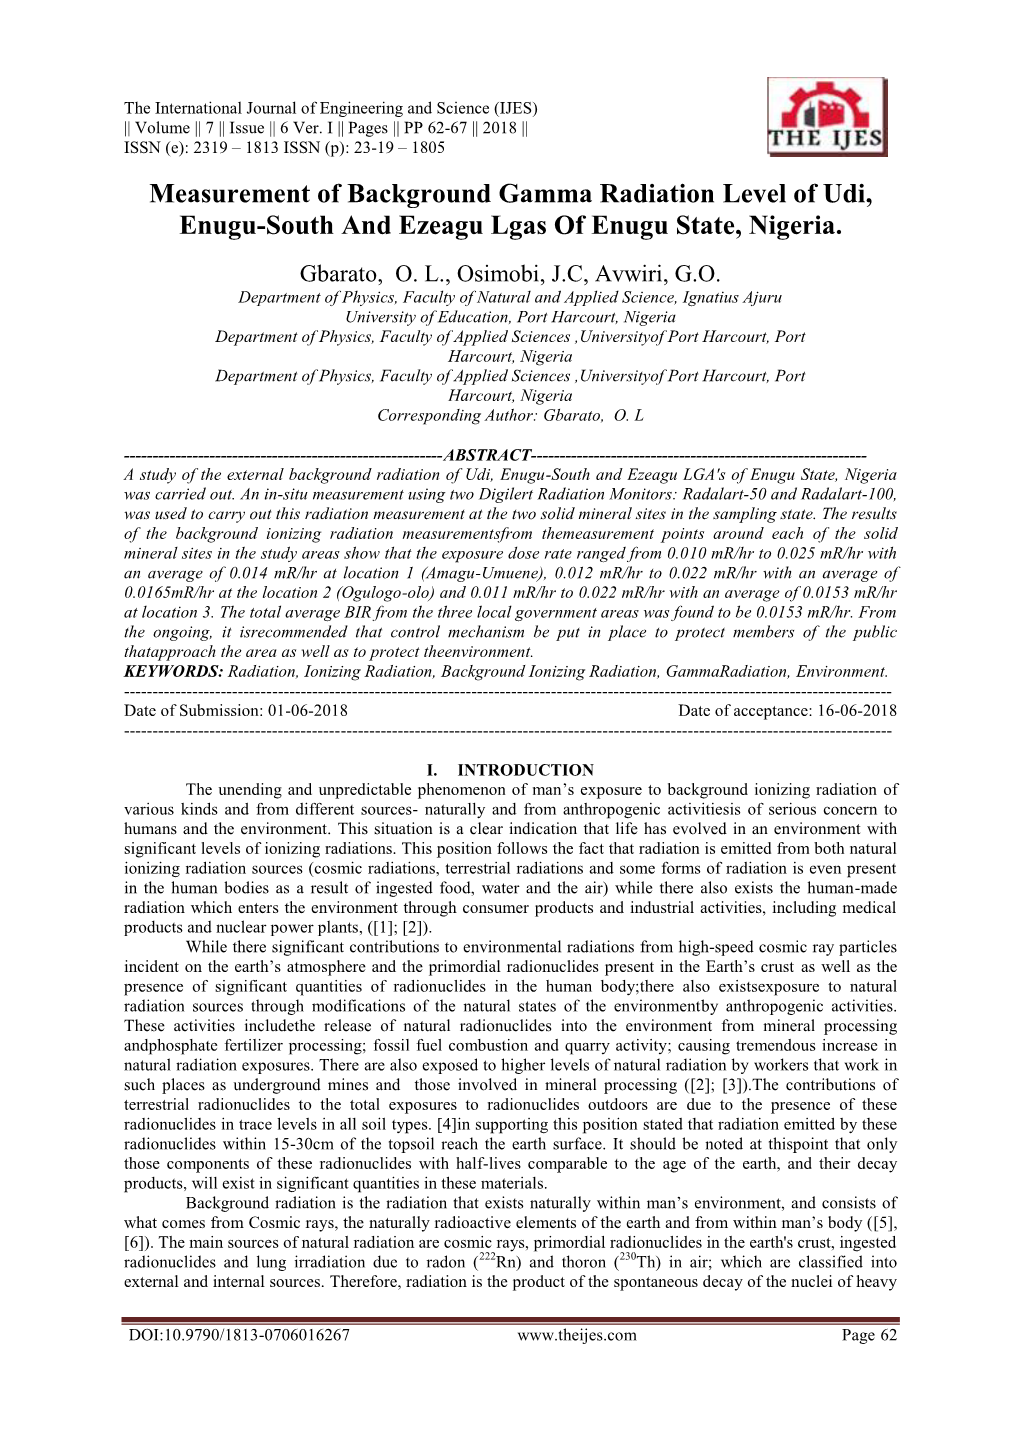 Measurement of Background Gamma Radiation Level of Udi, Enugu-South and Ezeagu Lgas of Enugu State, Nigeria